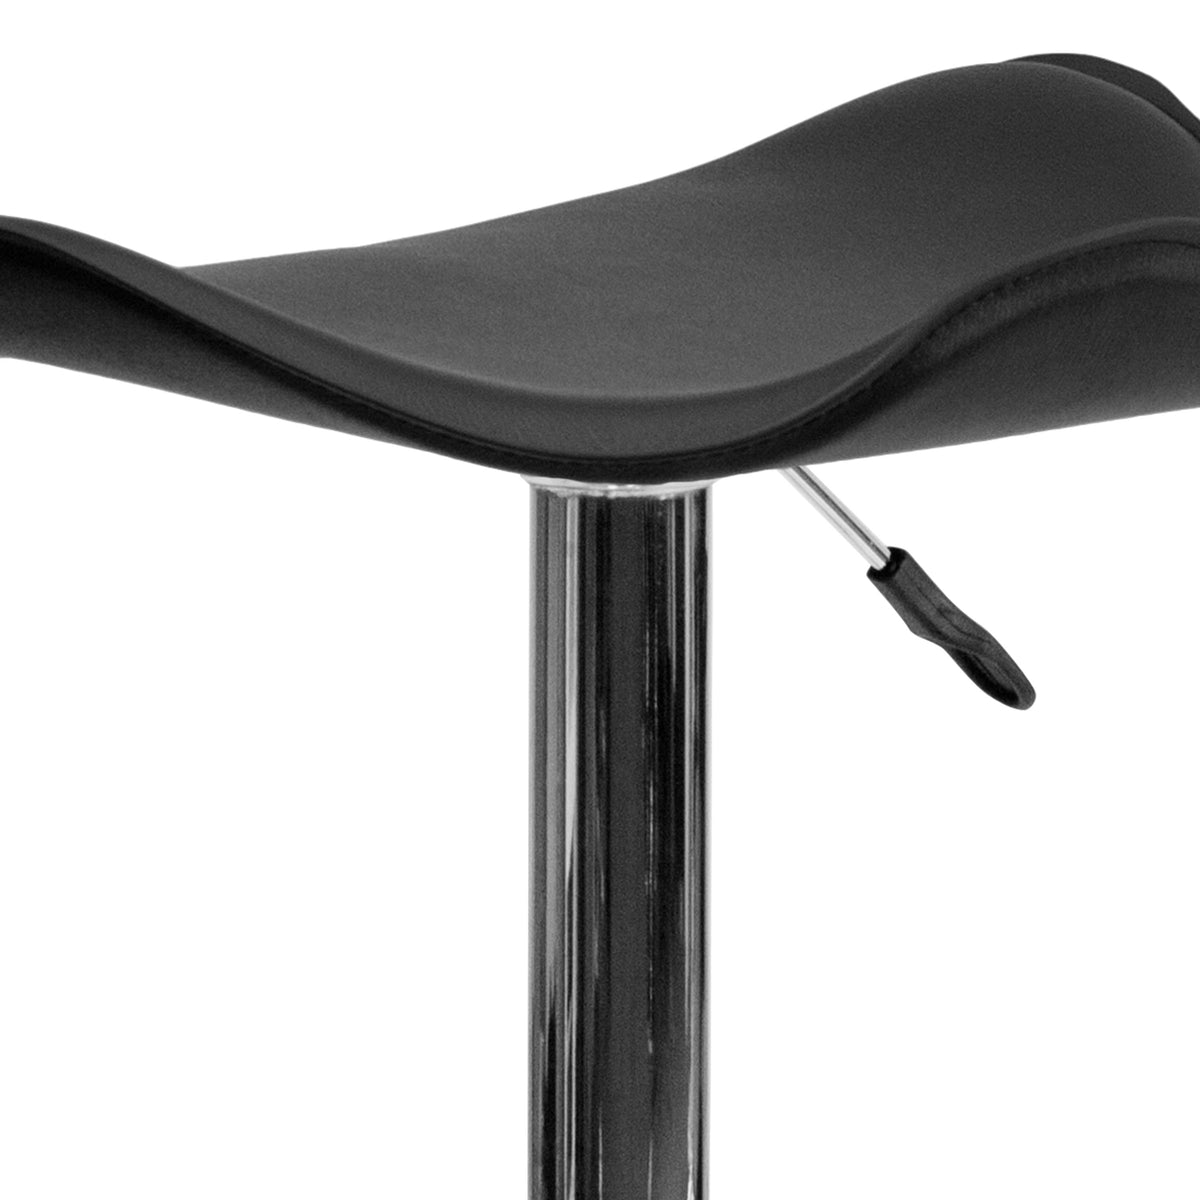 Black |#| Contemporary Black Vinyl Adjustable Height Barstool with Wavy Seat & Chrome Base